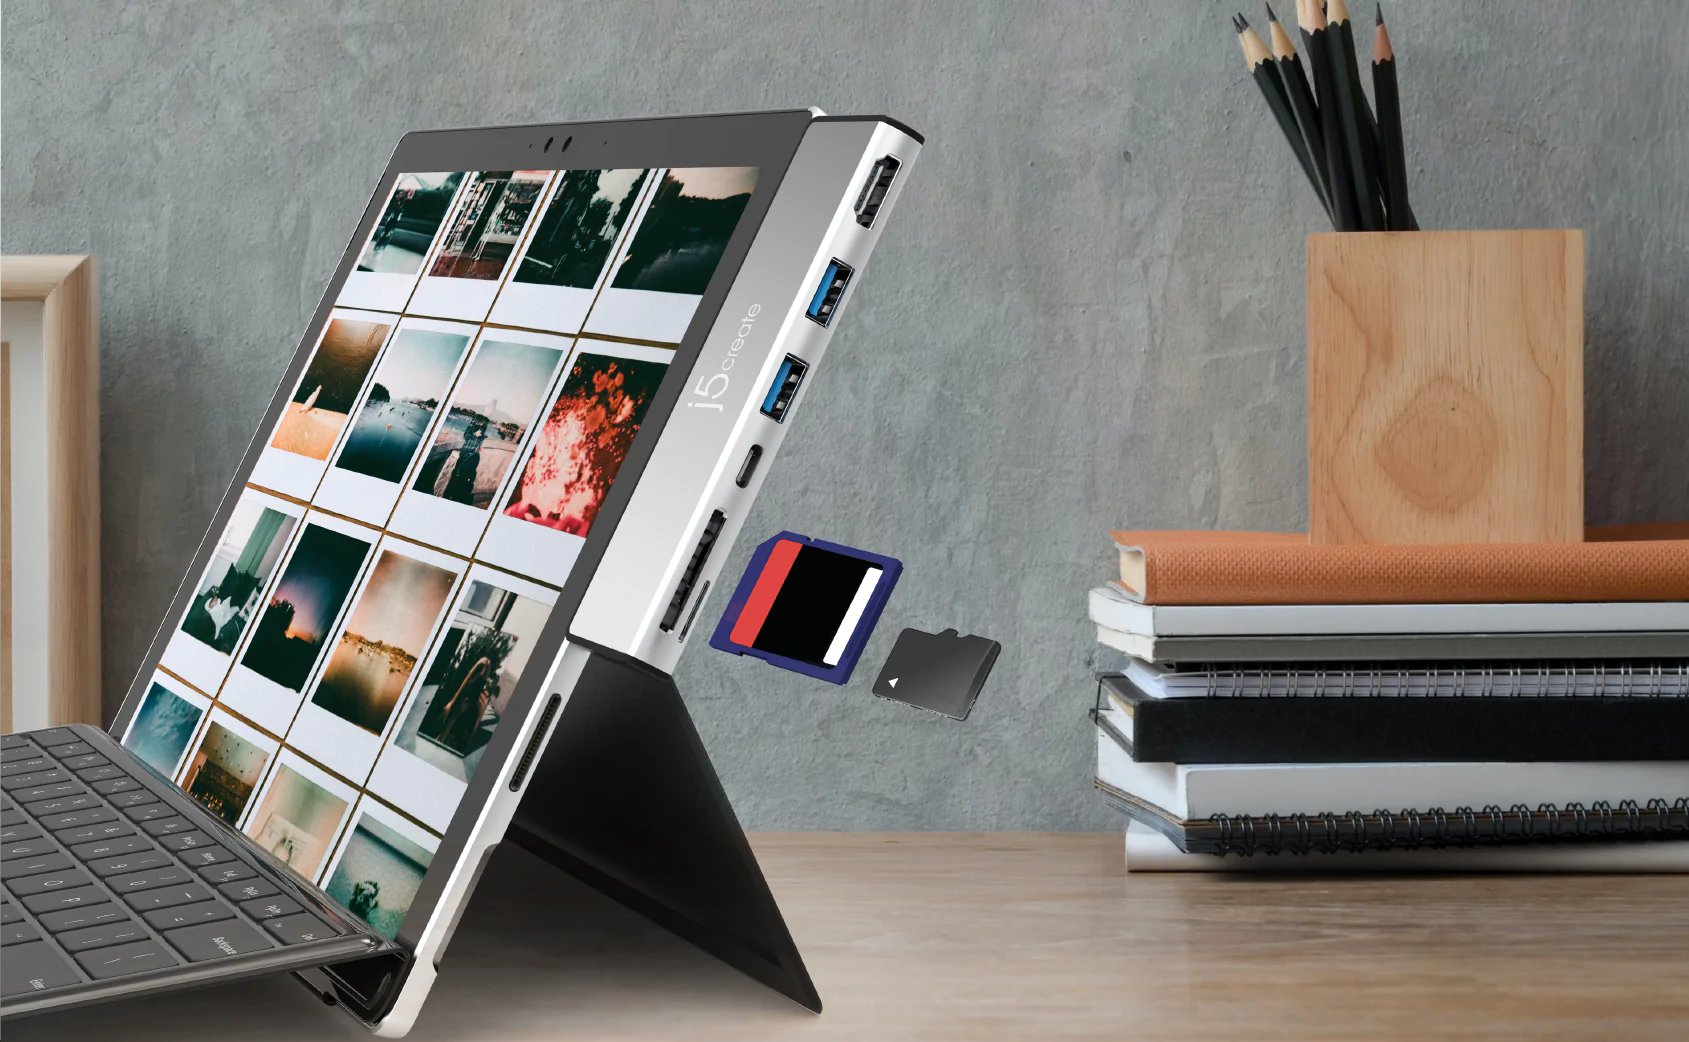 J5 Create Ultra Drive Mini Dock for Surface Pro 7 - JCD324B